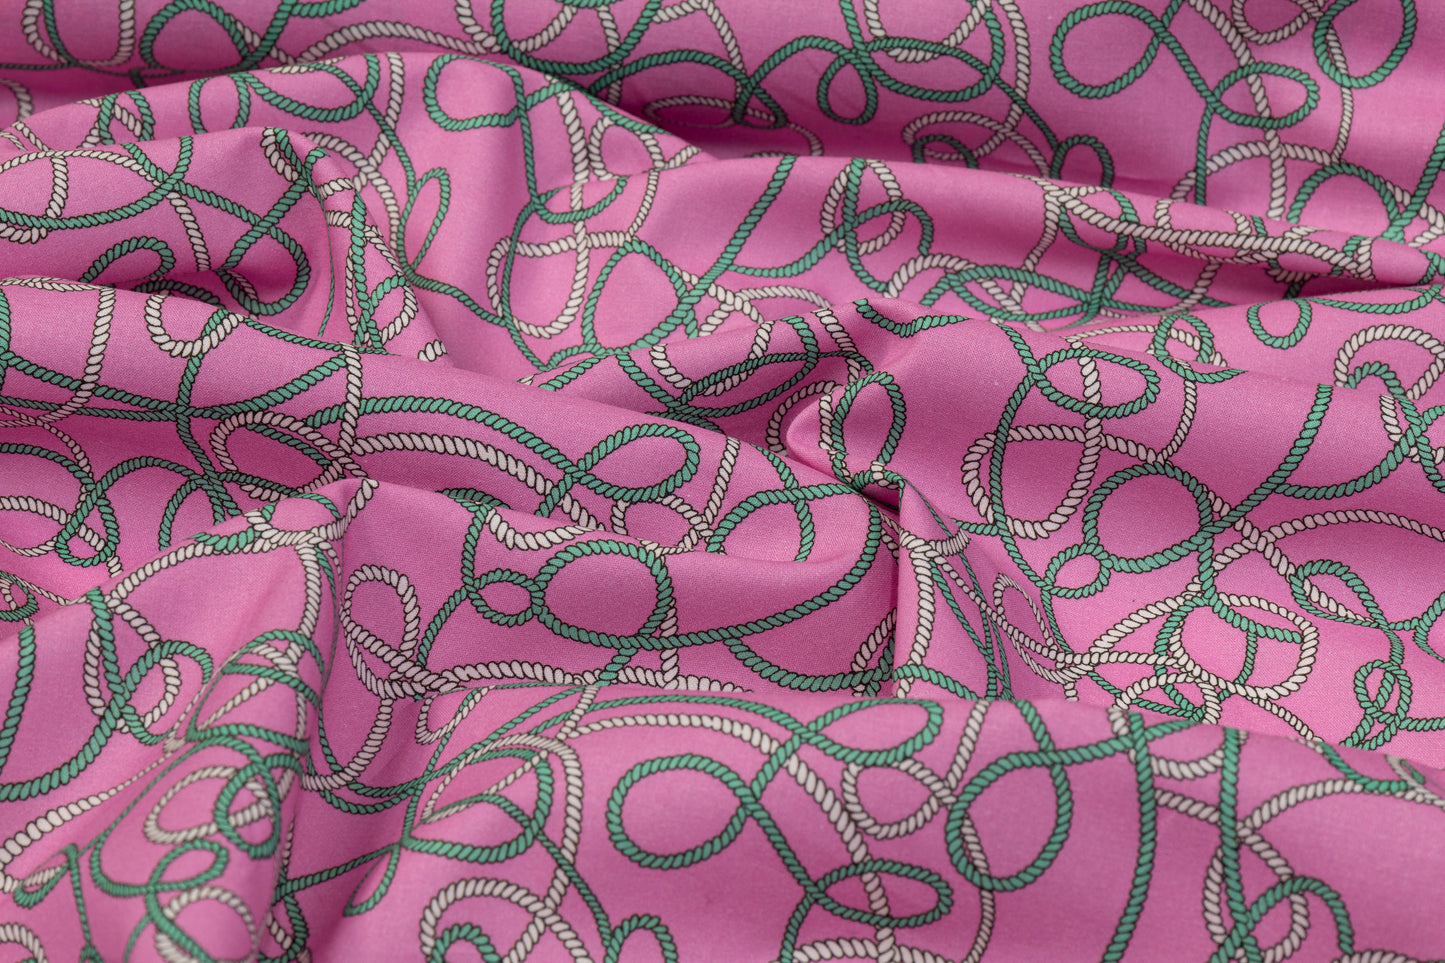 Rope Design Italian Cotton - Pink, Green, White